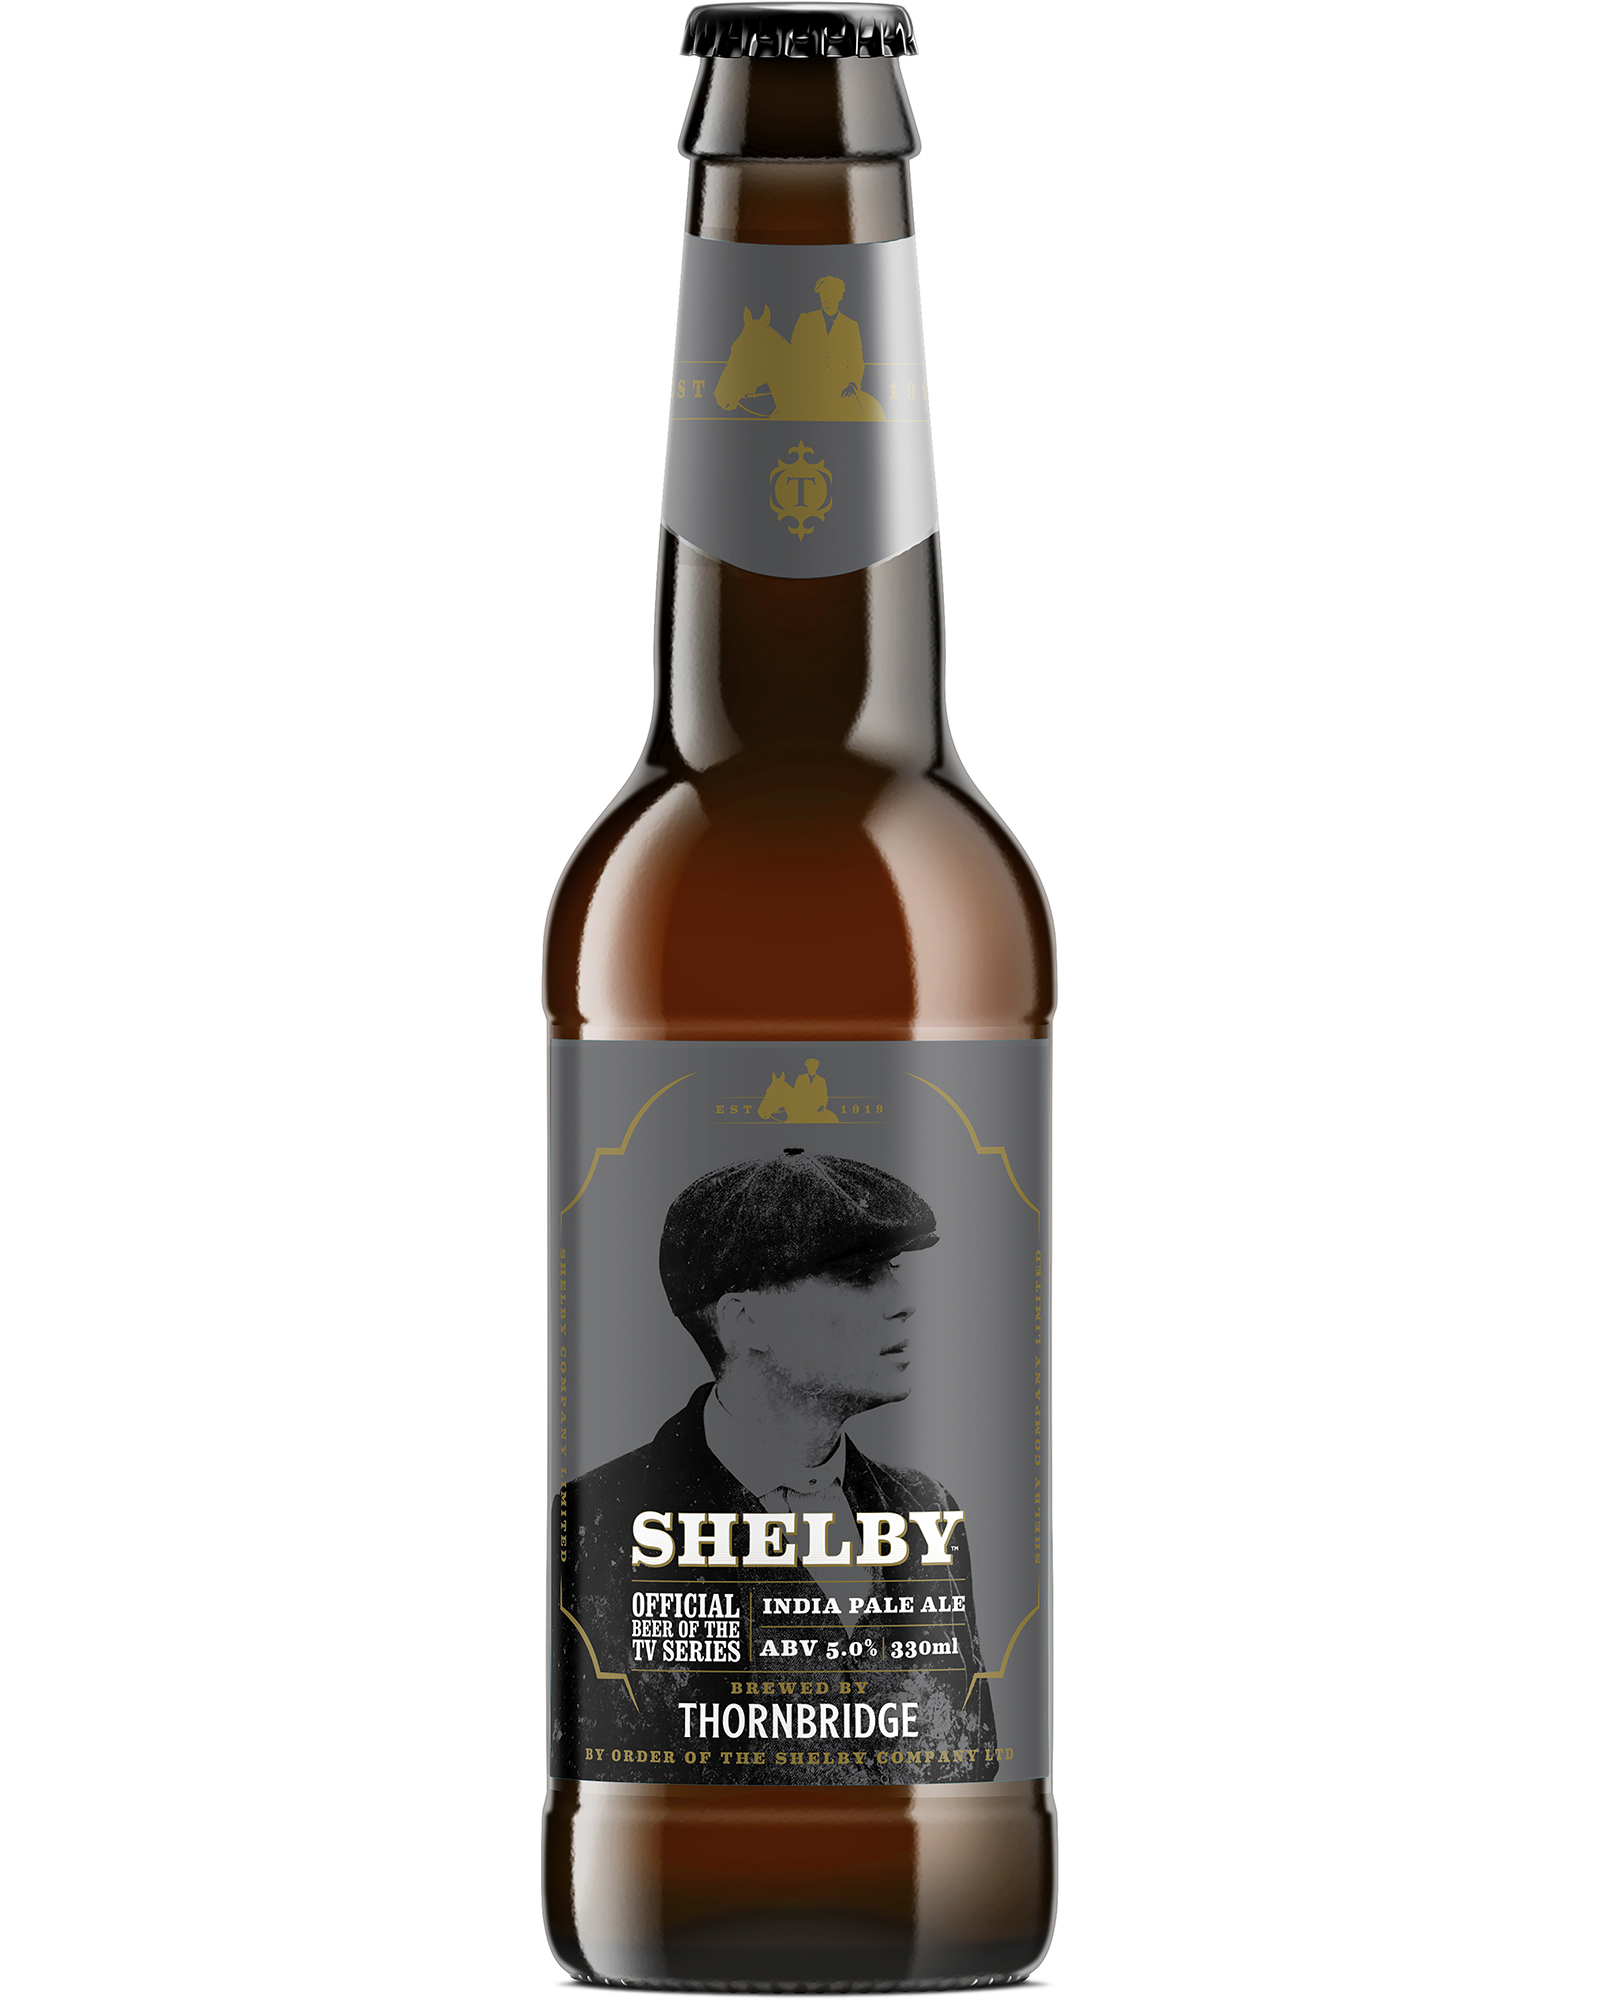 Thornbridge Shelby India Pale Ale